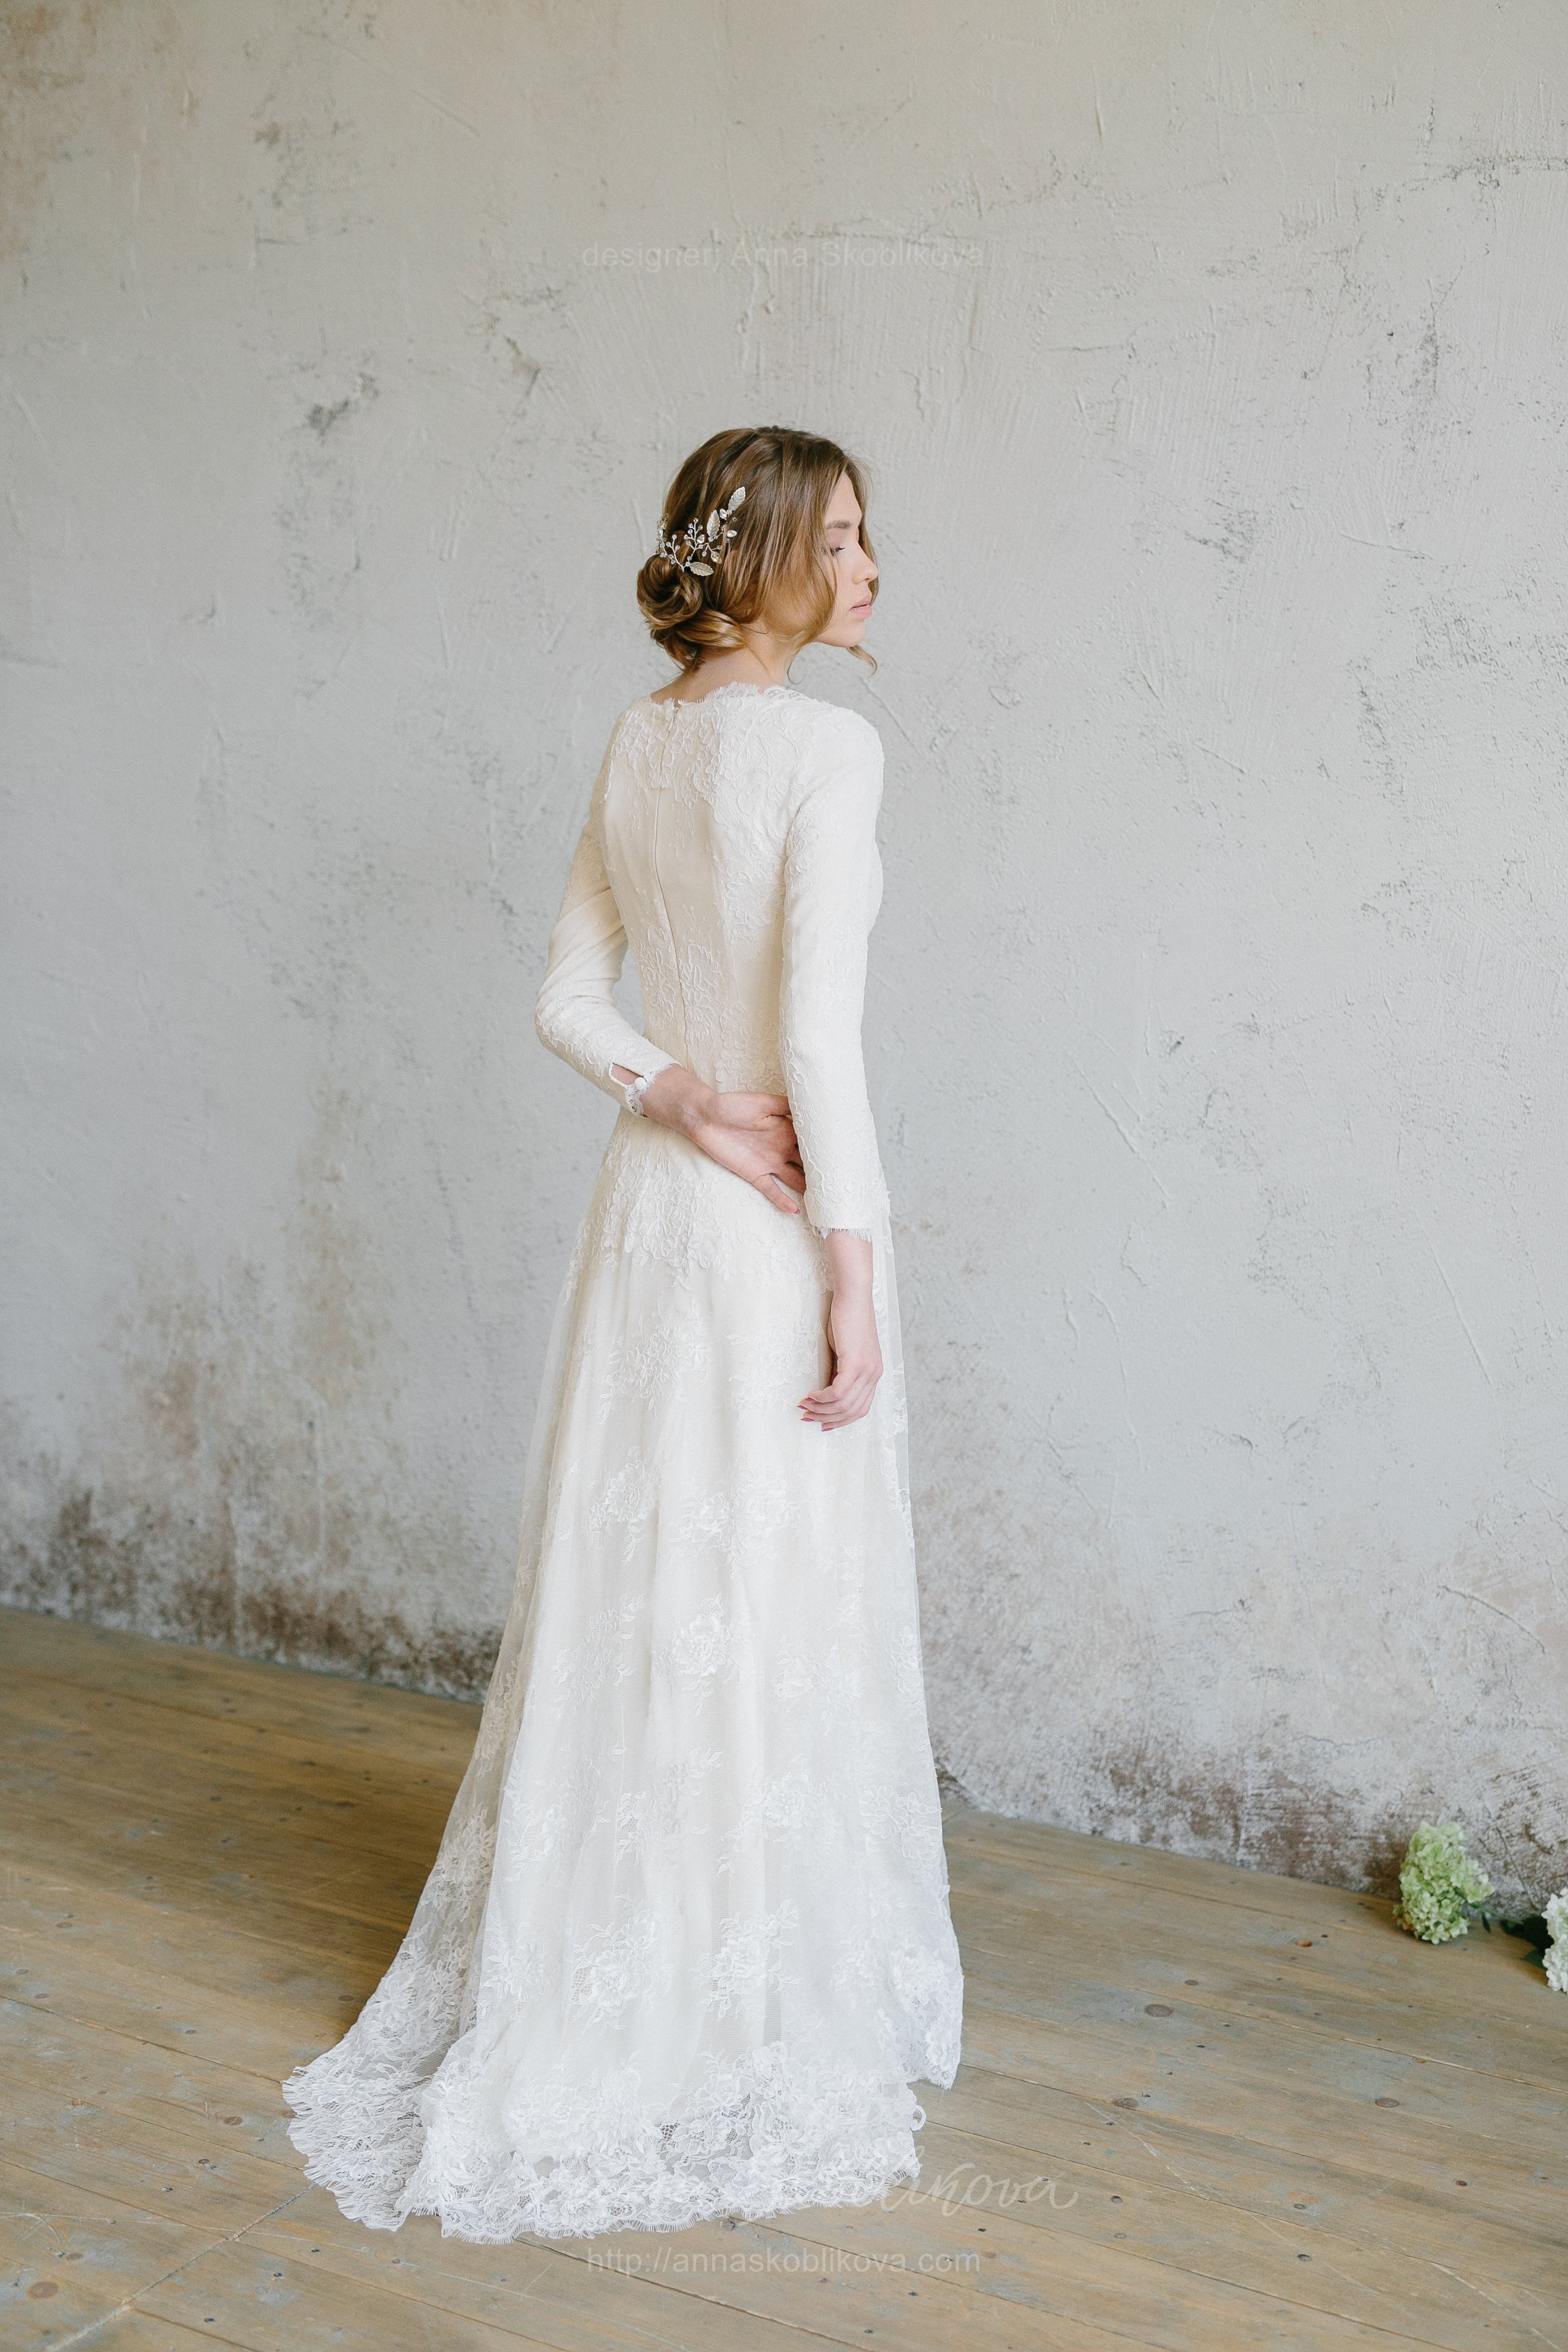 Winter Wedding Dress Tips from Designers